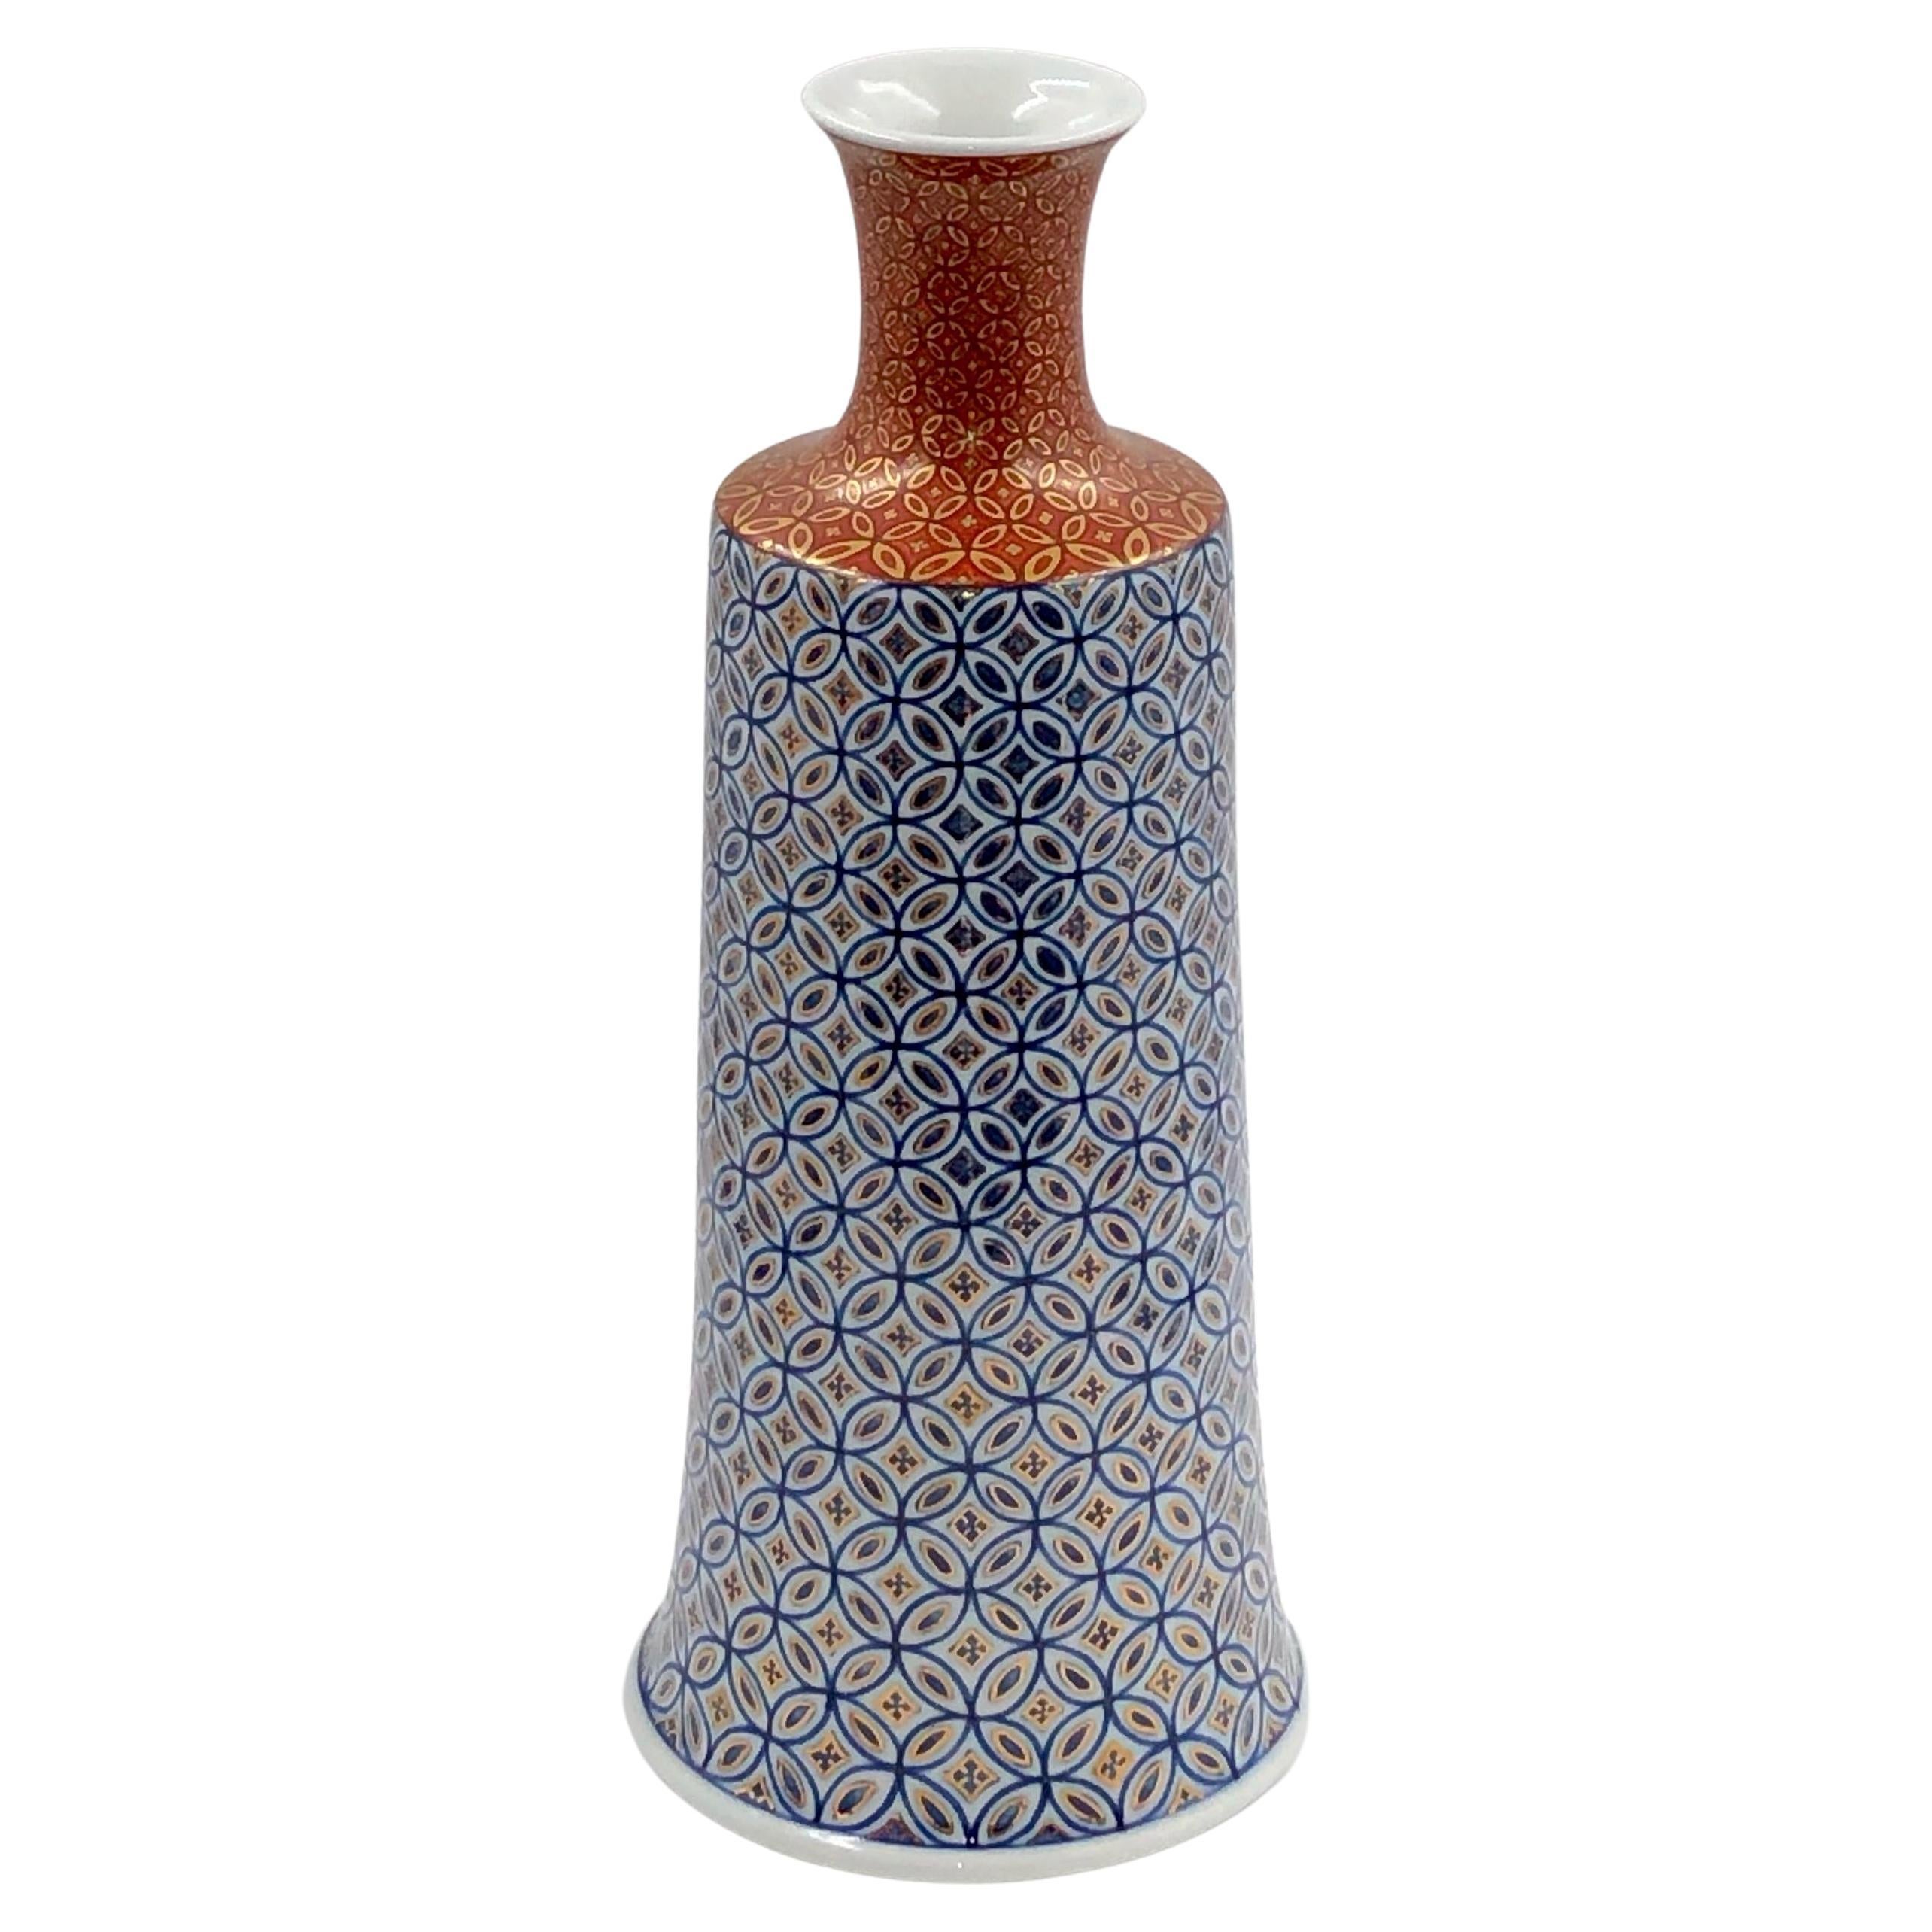 Japanese Contemporary Red Blue Gilded Porcelain Vase by Master Artist